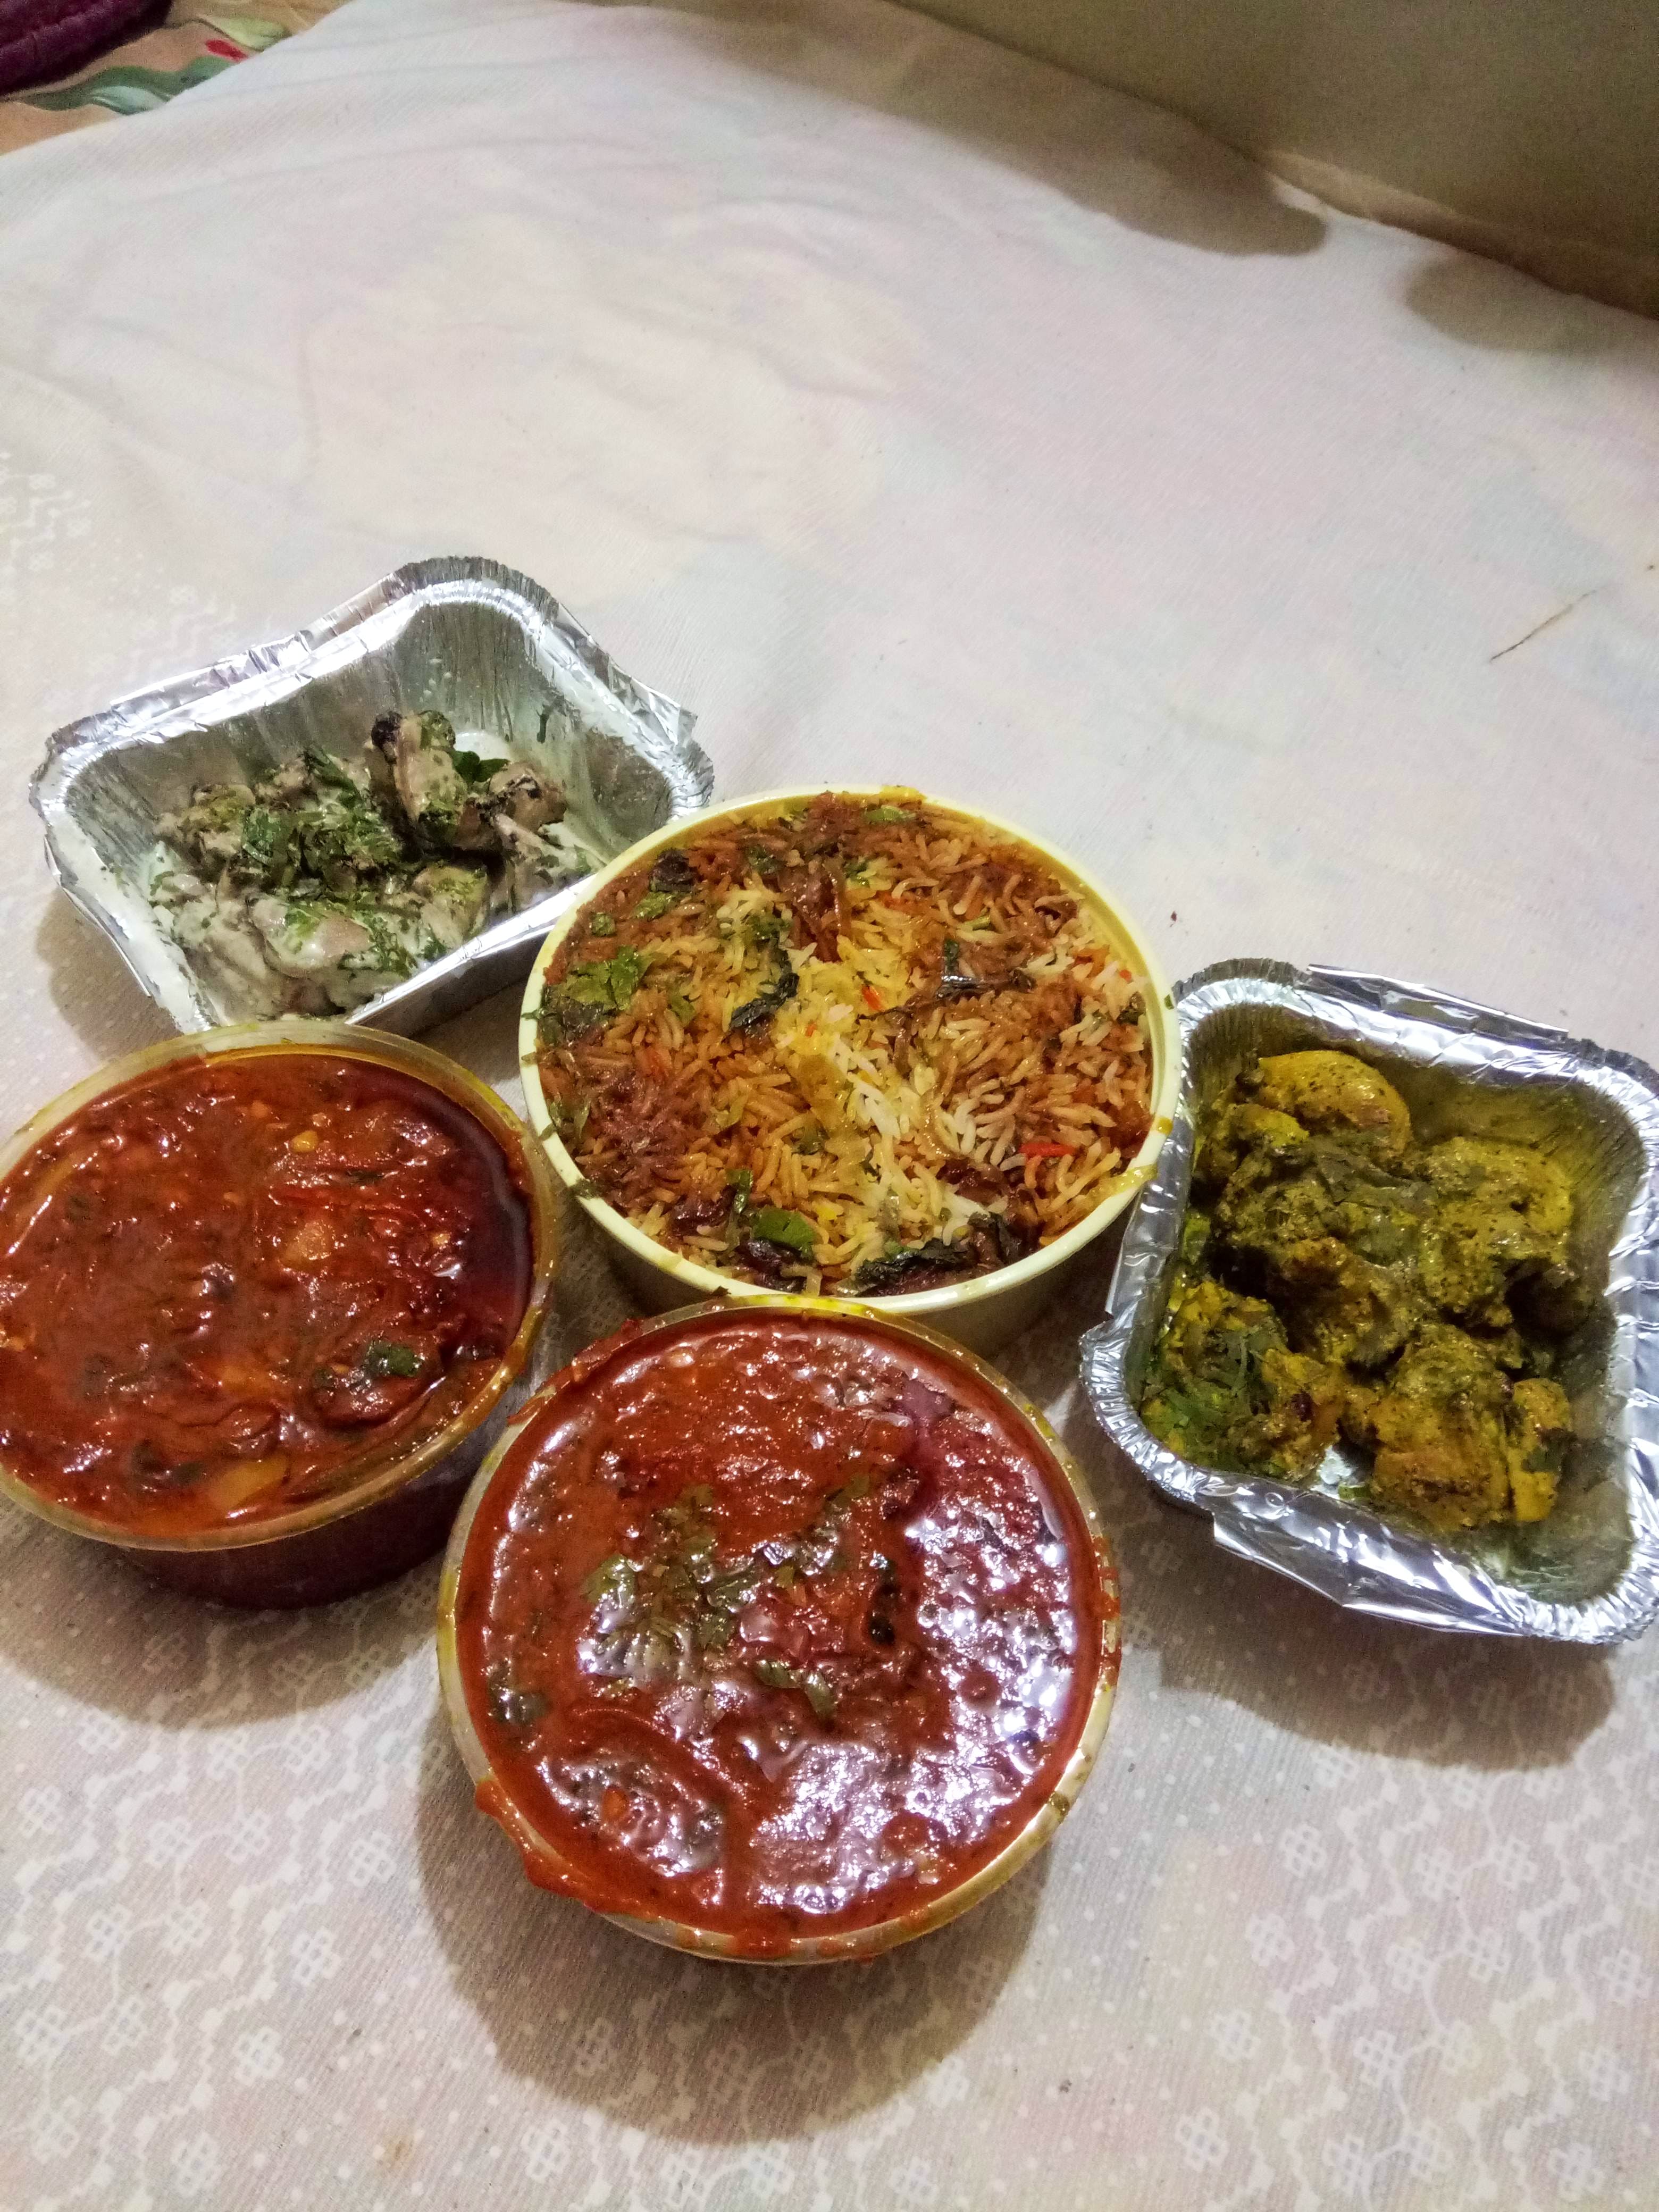 Dish,Food,Cuisine,Ingredient,Sambal,Produce,Muhammara,Vegetarian food,Indian cuisine,Curry